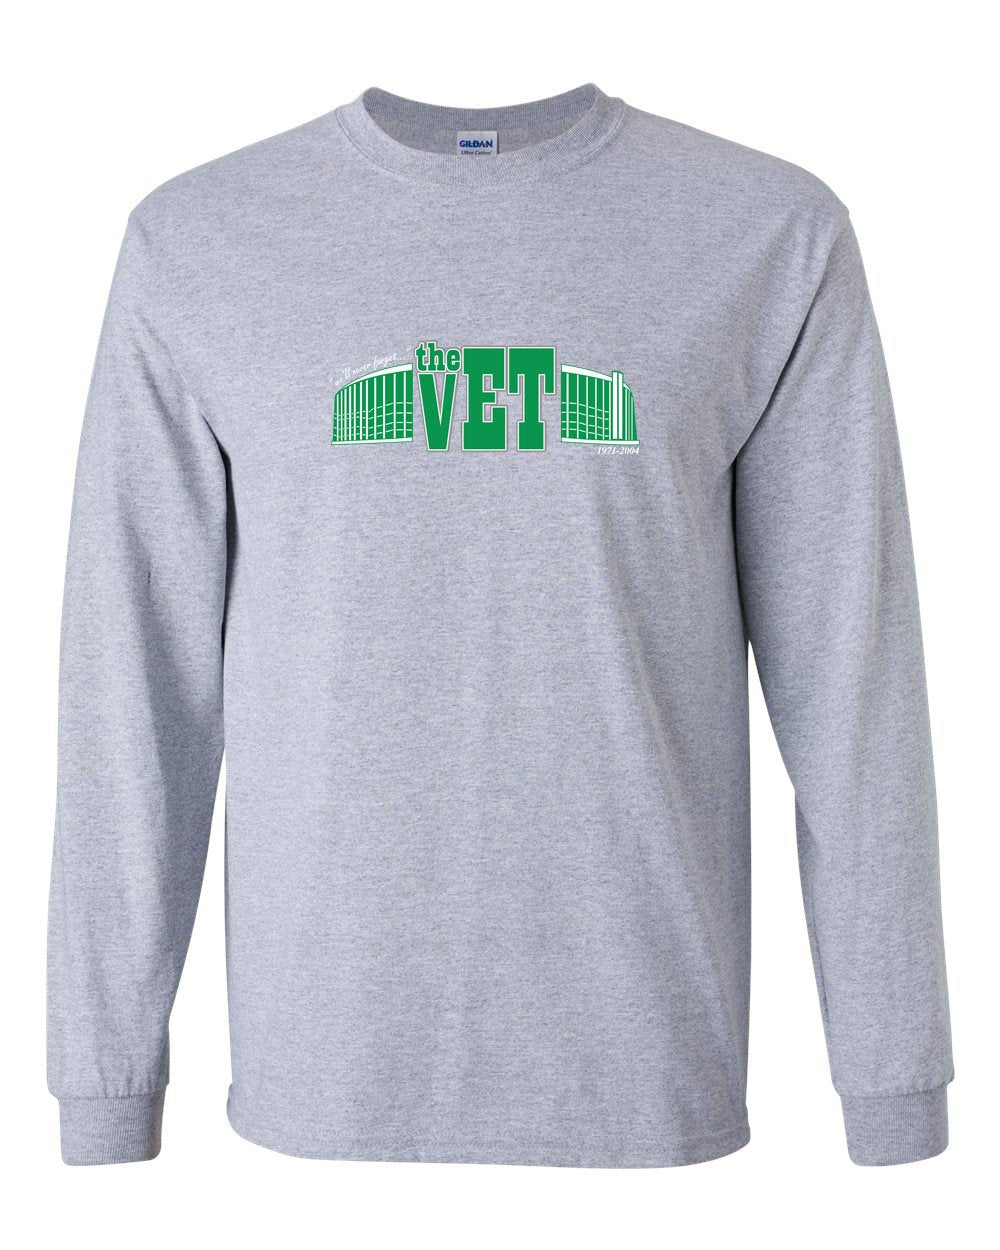 The Vet Football MENS Long Sleeve Heavy Cotton T-Shirt